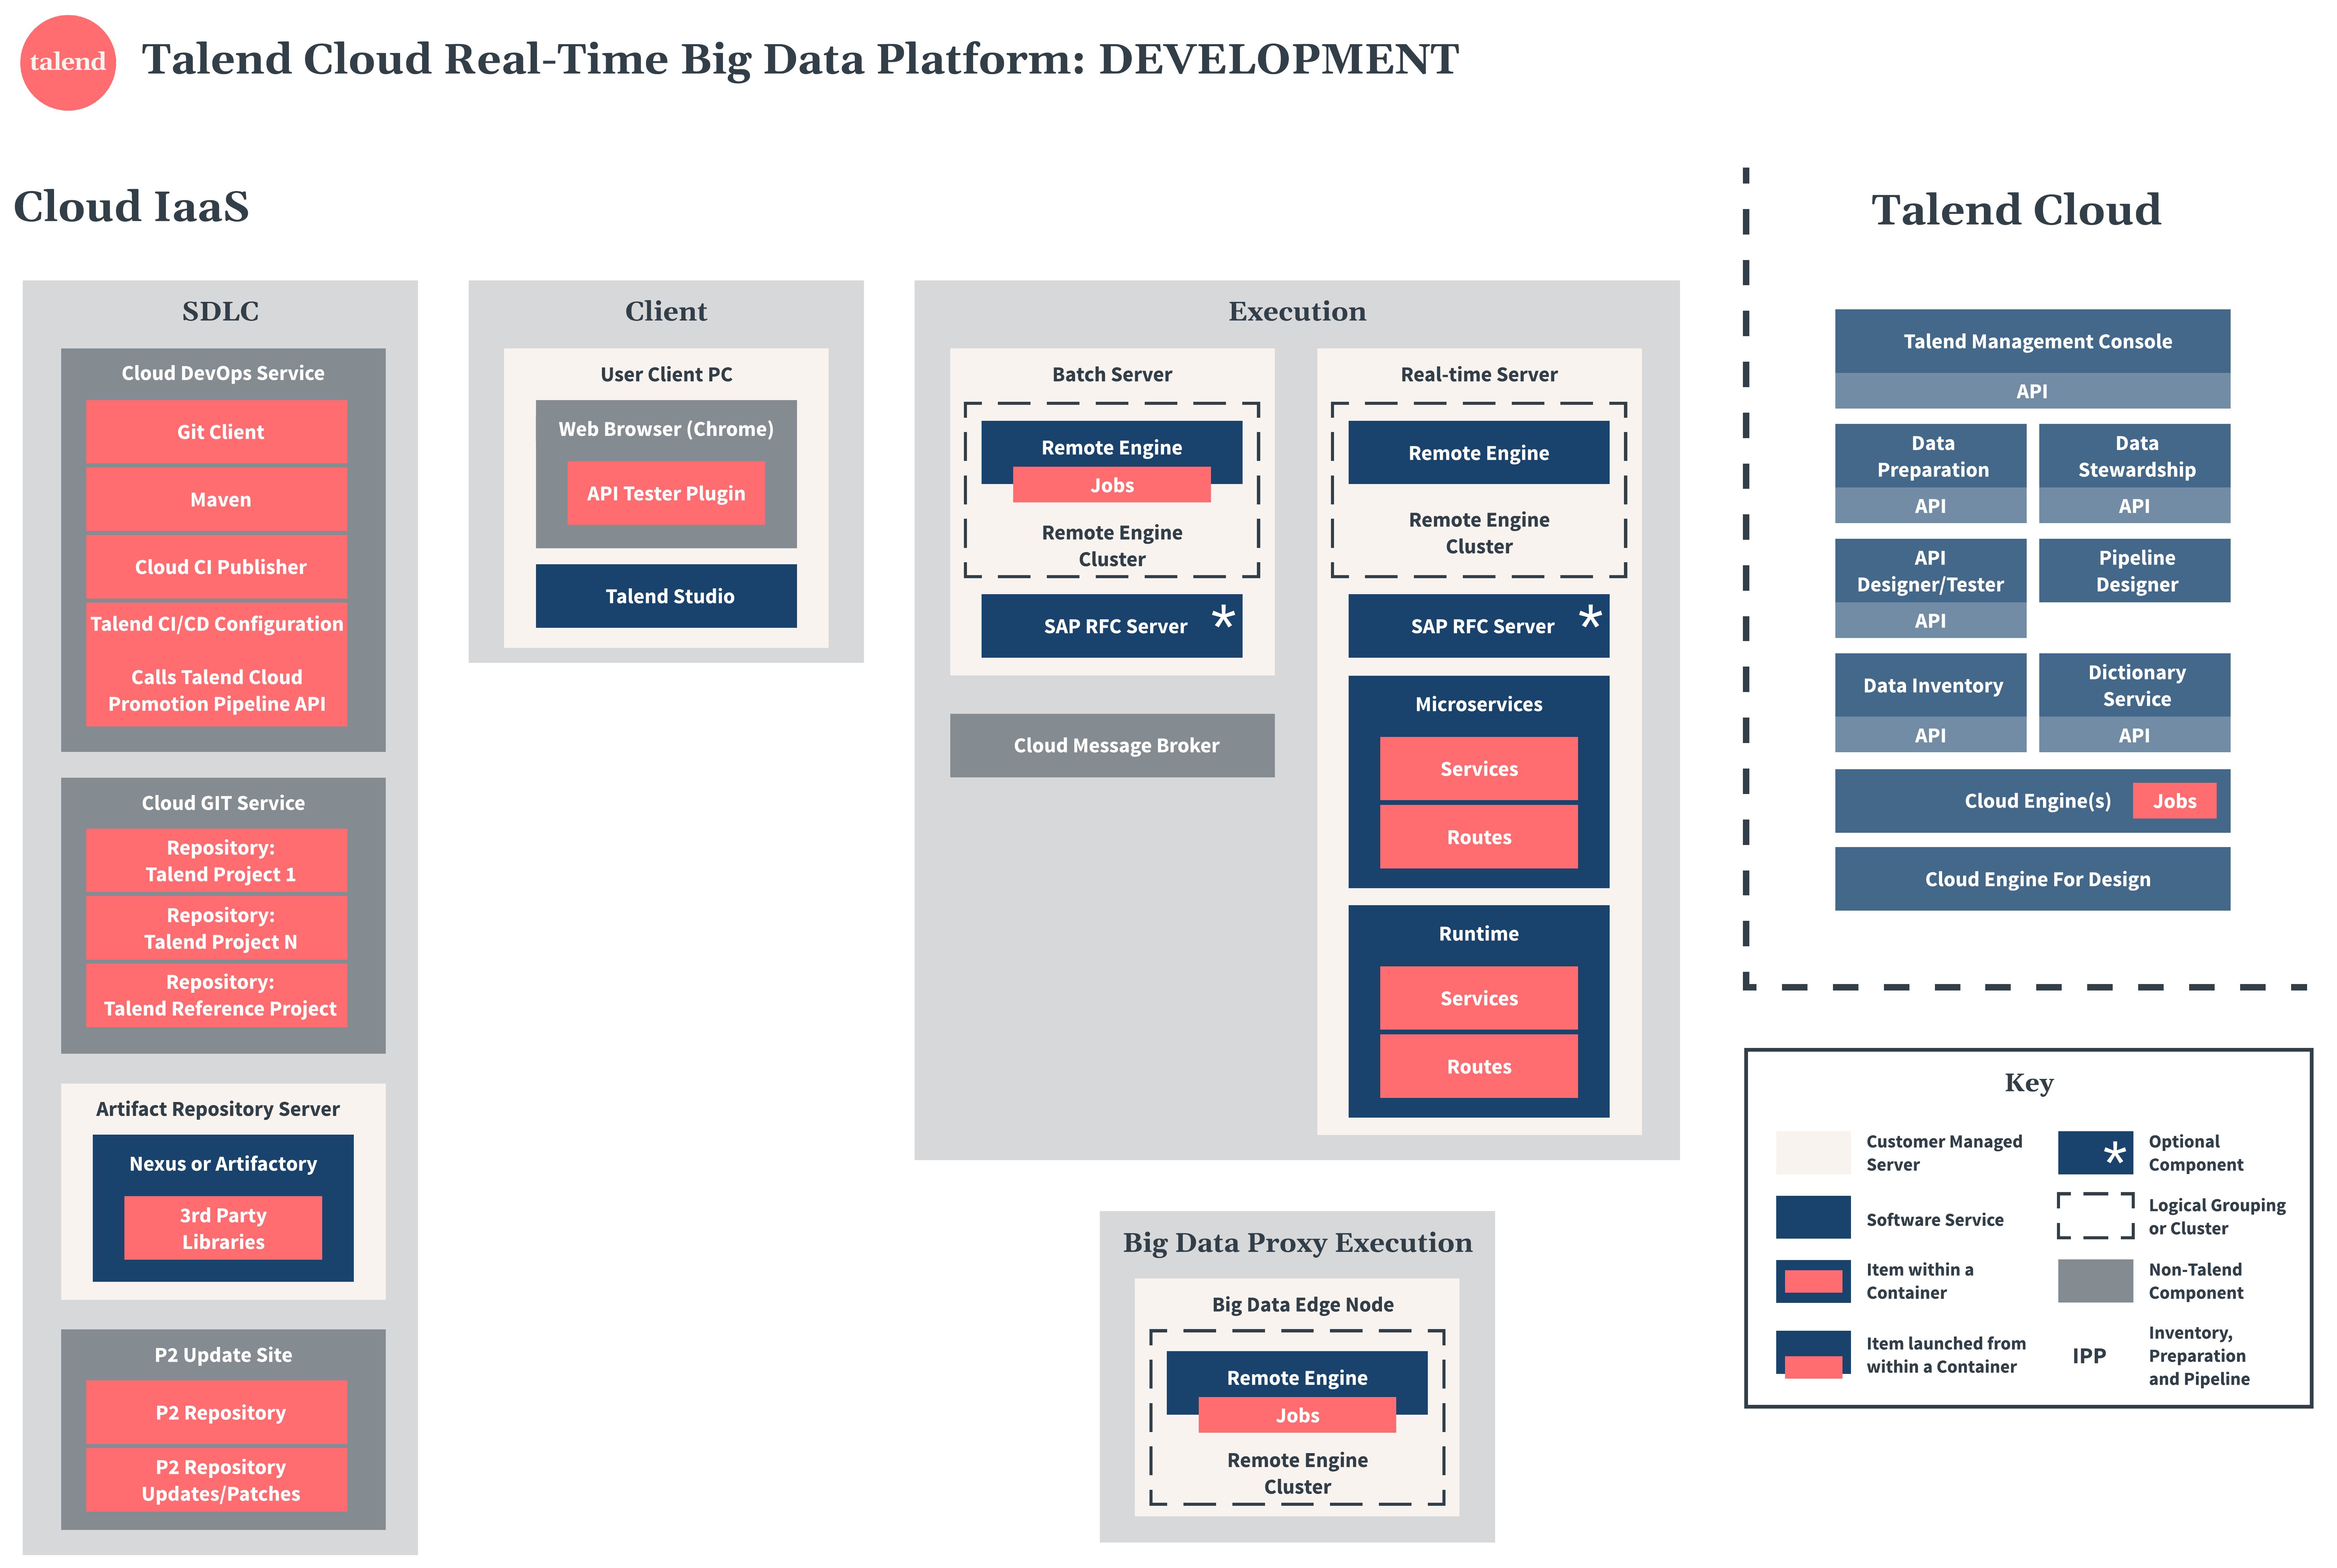 Talend Cloud Real-Time Big Data Platform development diagram.